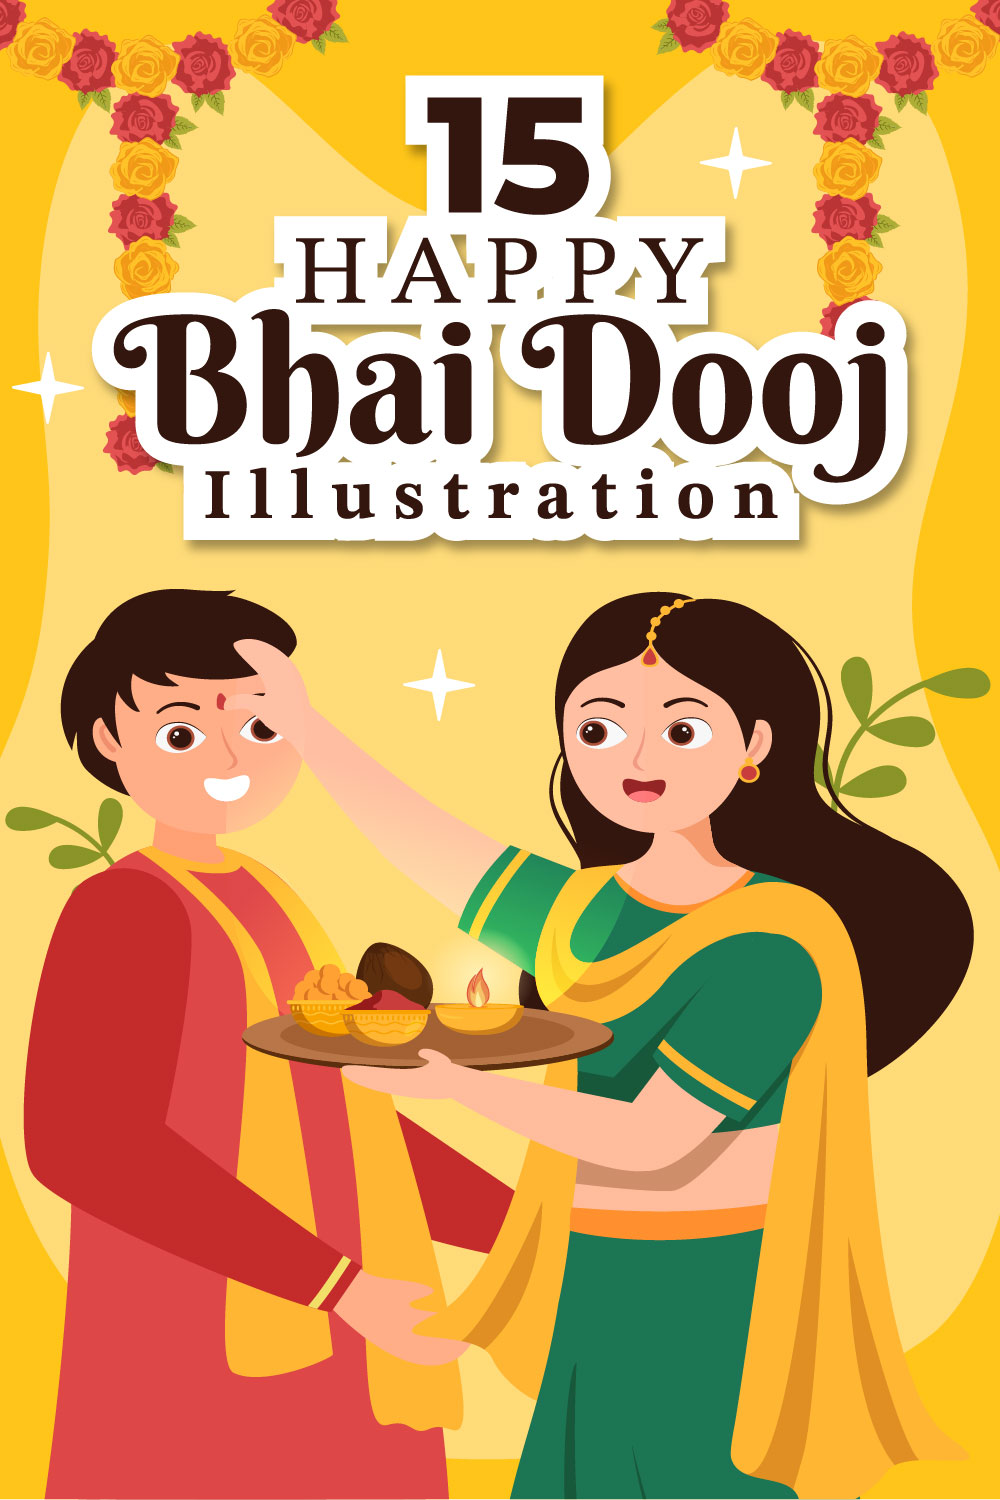 15 Bhai Dooj Indian Festival Celebration Illustration Pinterest Image.